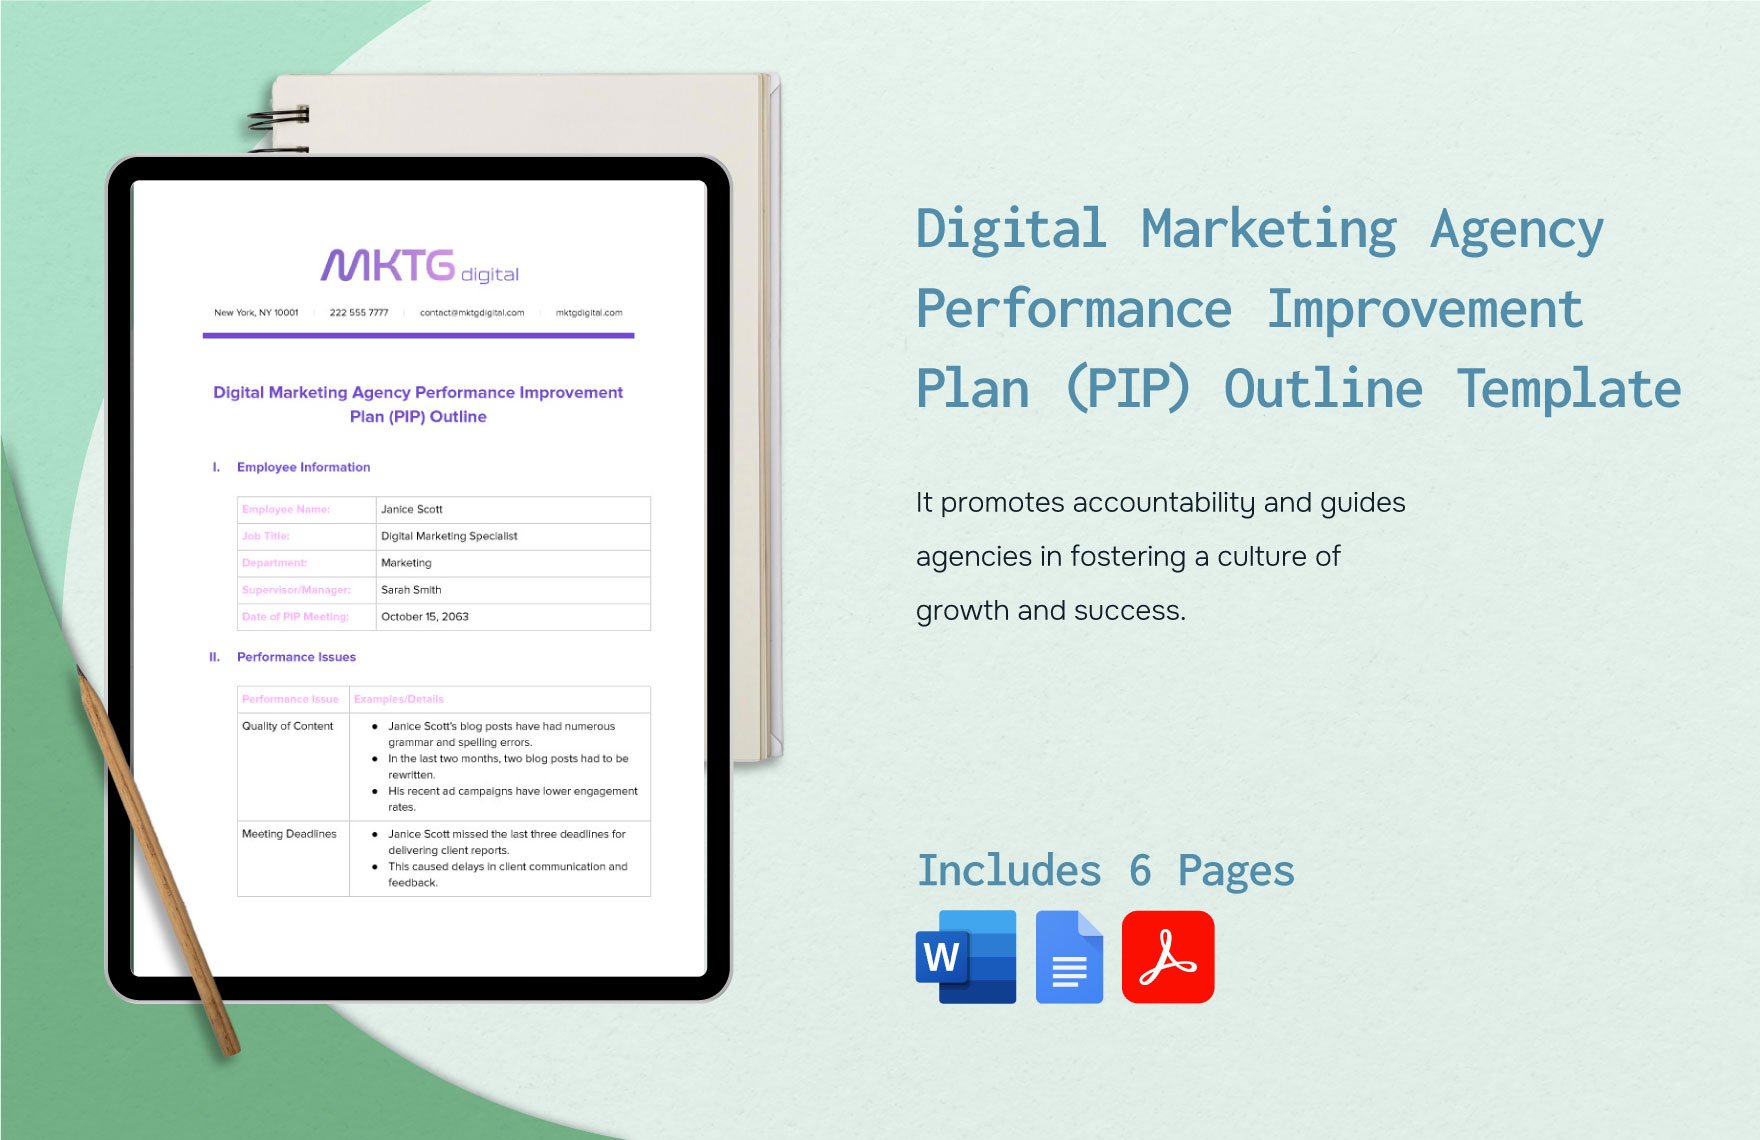 Digital Marketing Agency Performance Improvement Plan (PIP) Outline Template